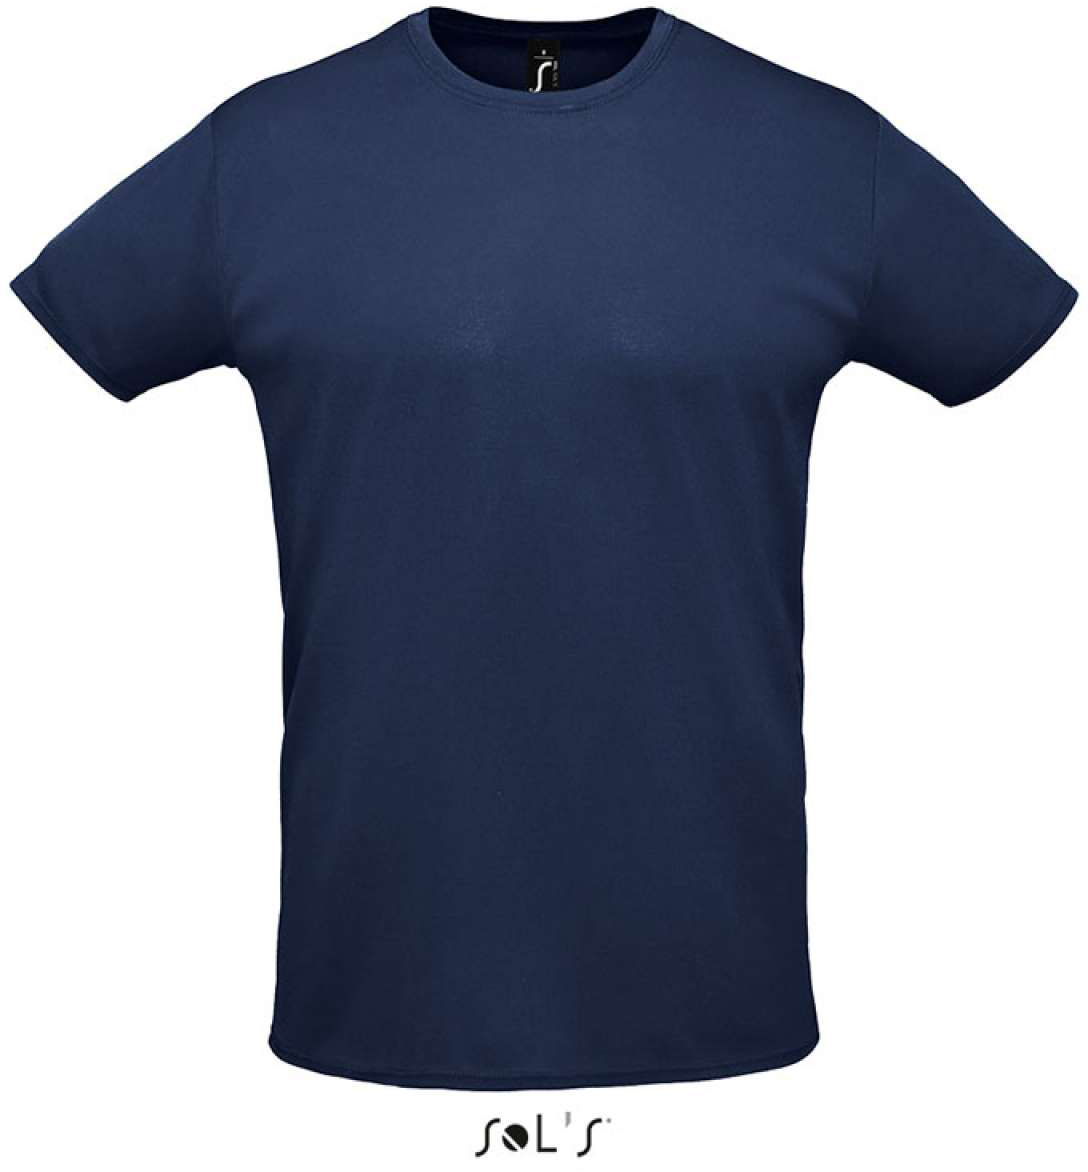 Sol's Sprint - Unisex Sport T-shirt - blue